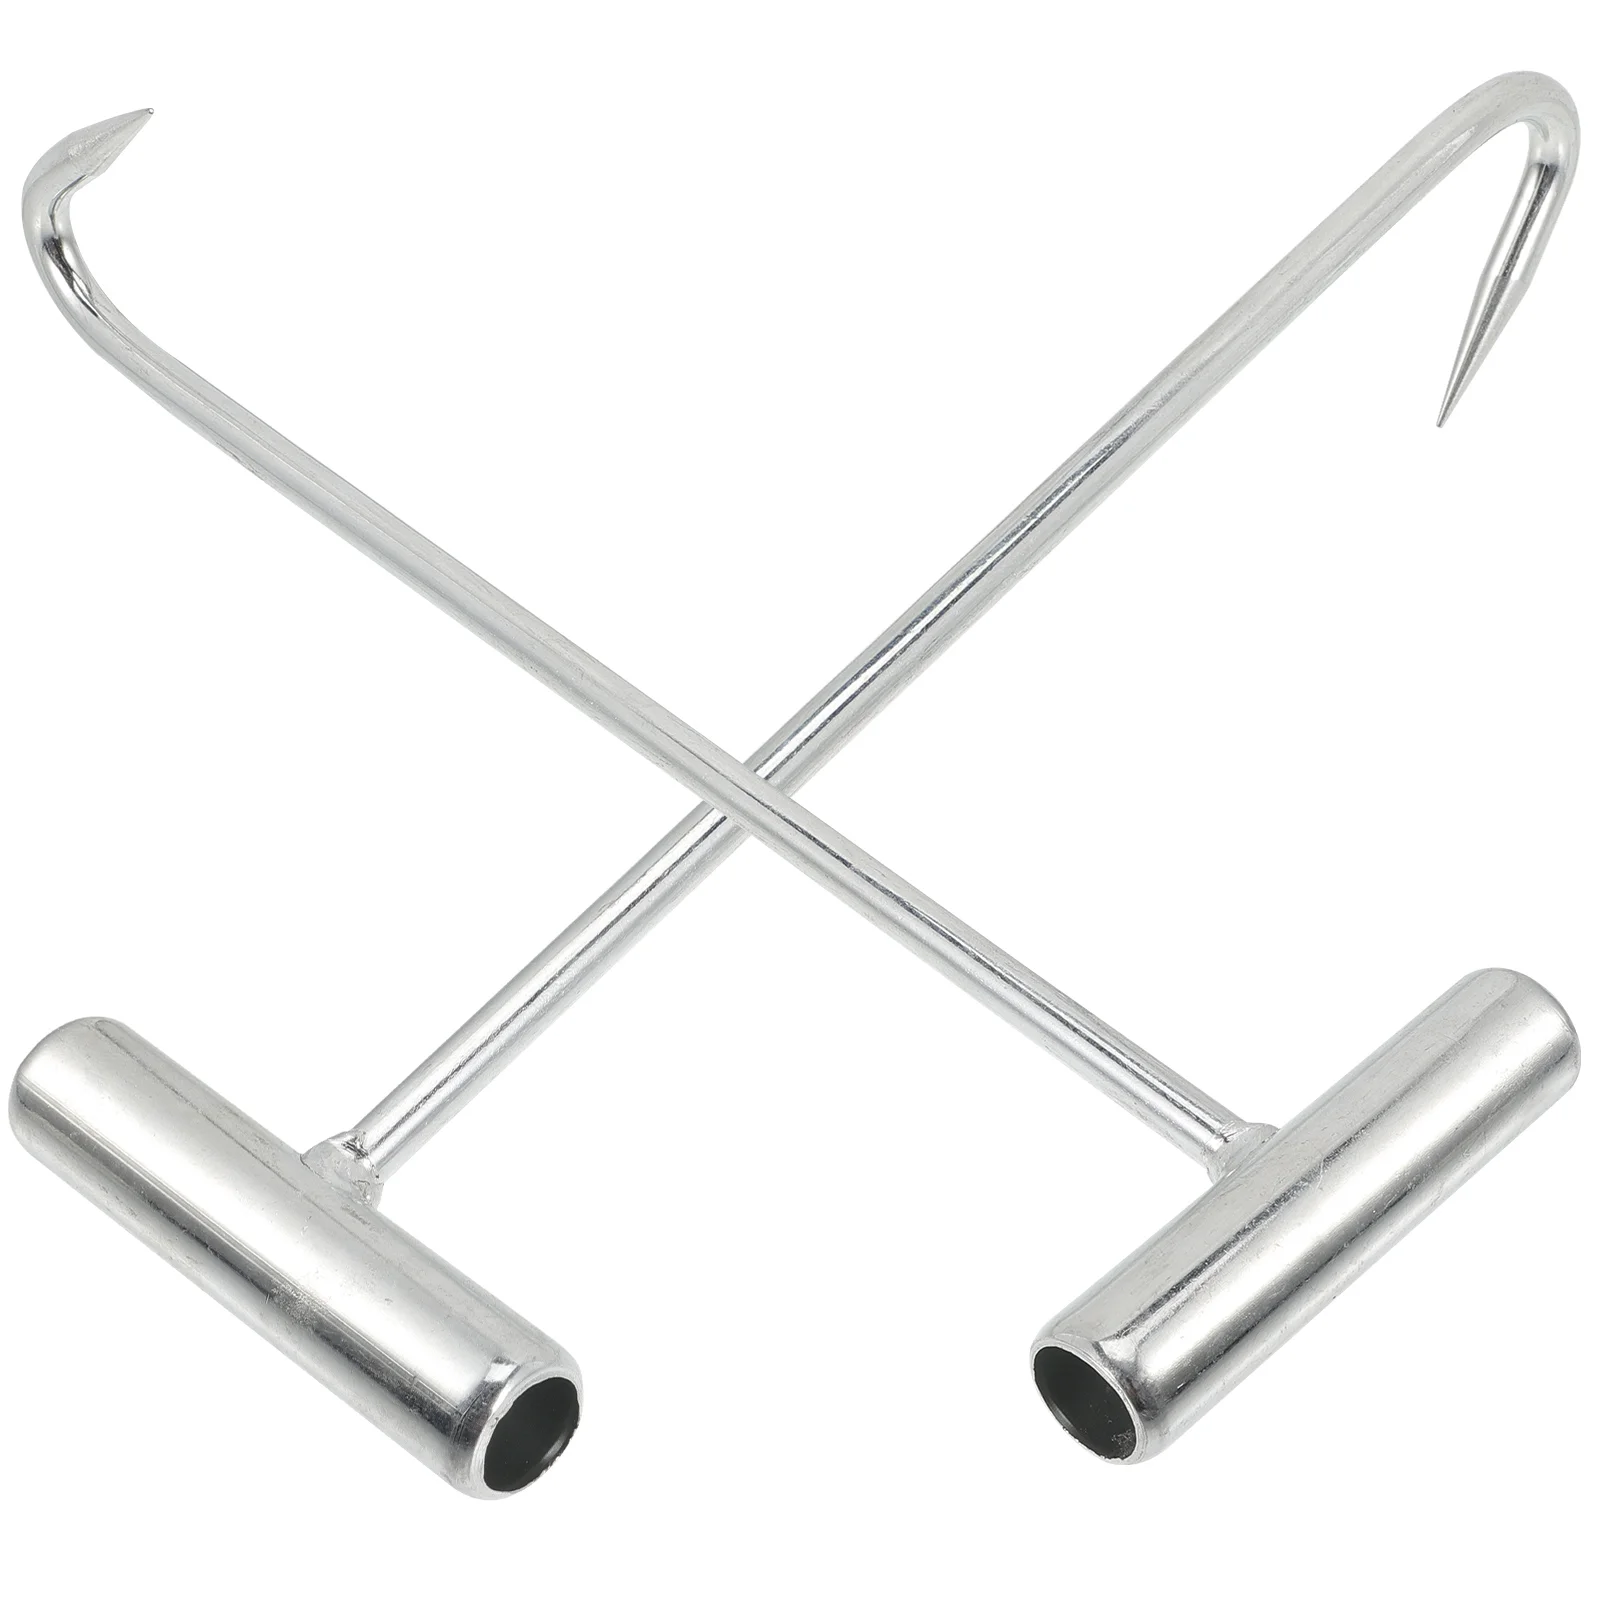 

2 Pcs Heavy Duty Hooks Hanging T-shape Manhole Tool Well Cover Pull Lifting Iron Bed Rails